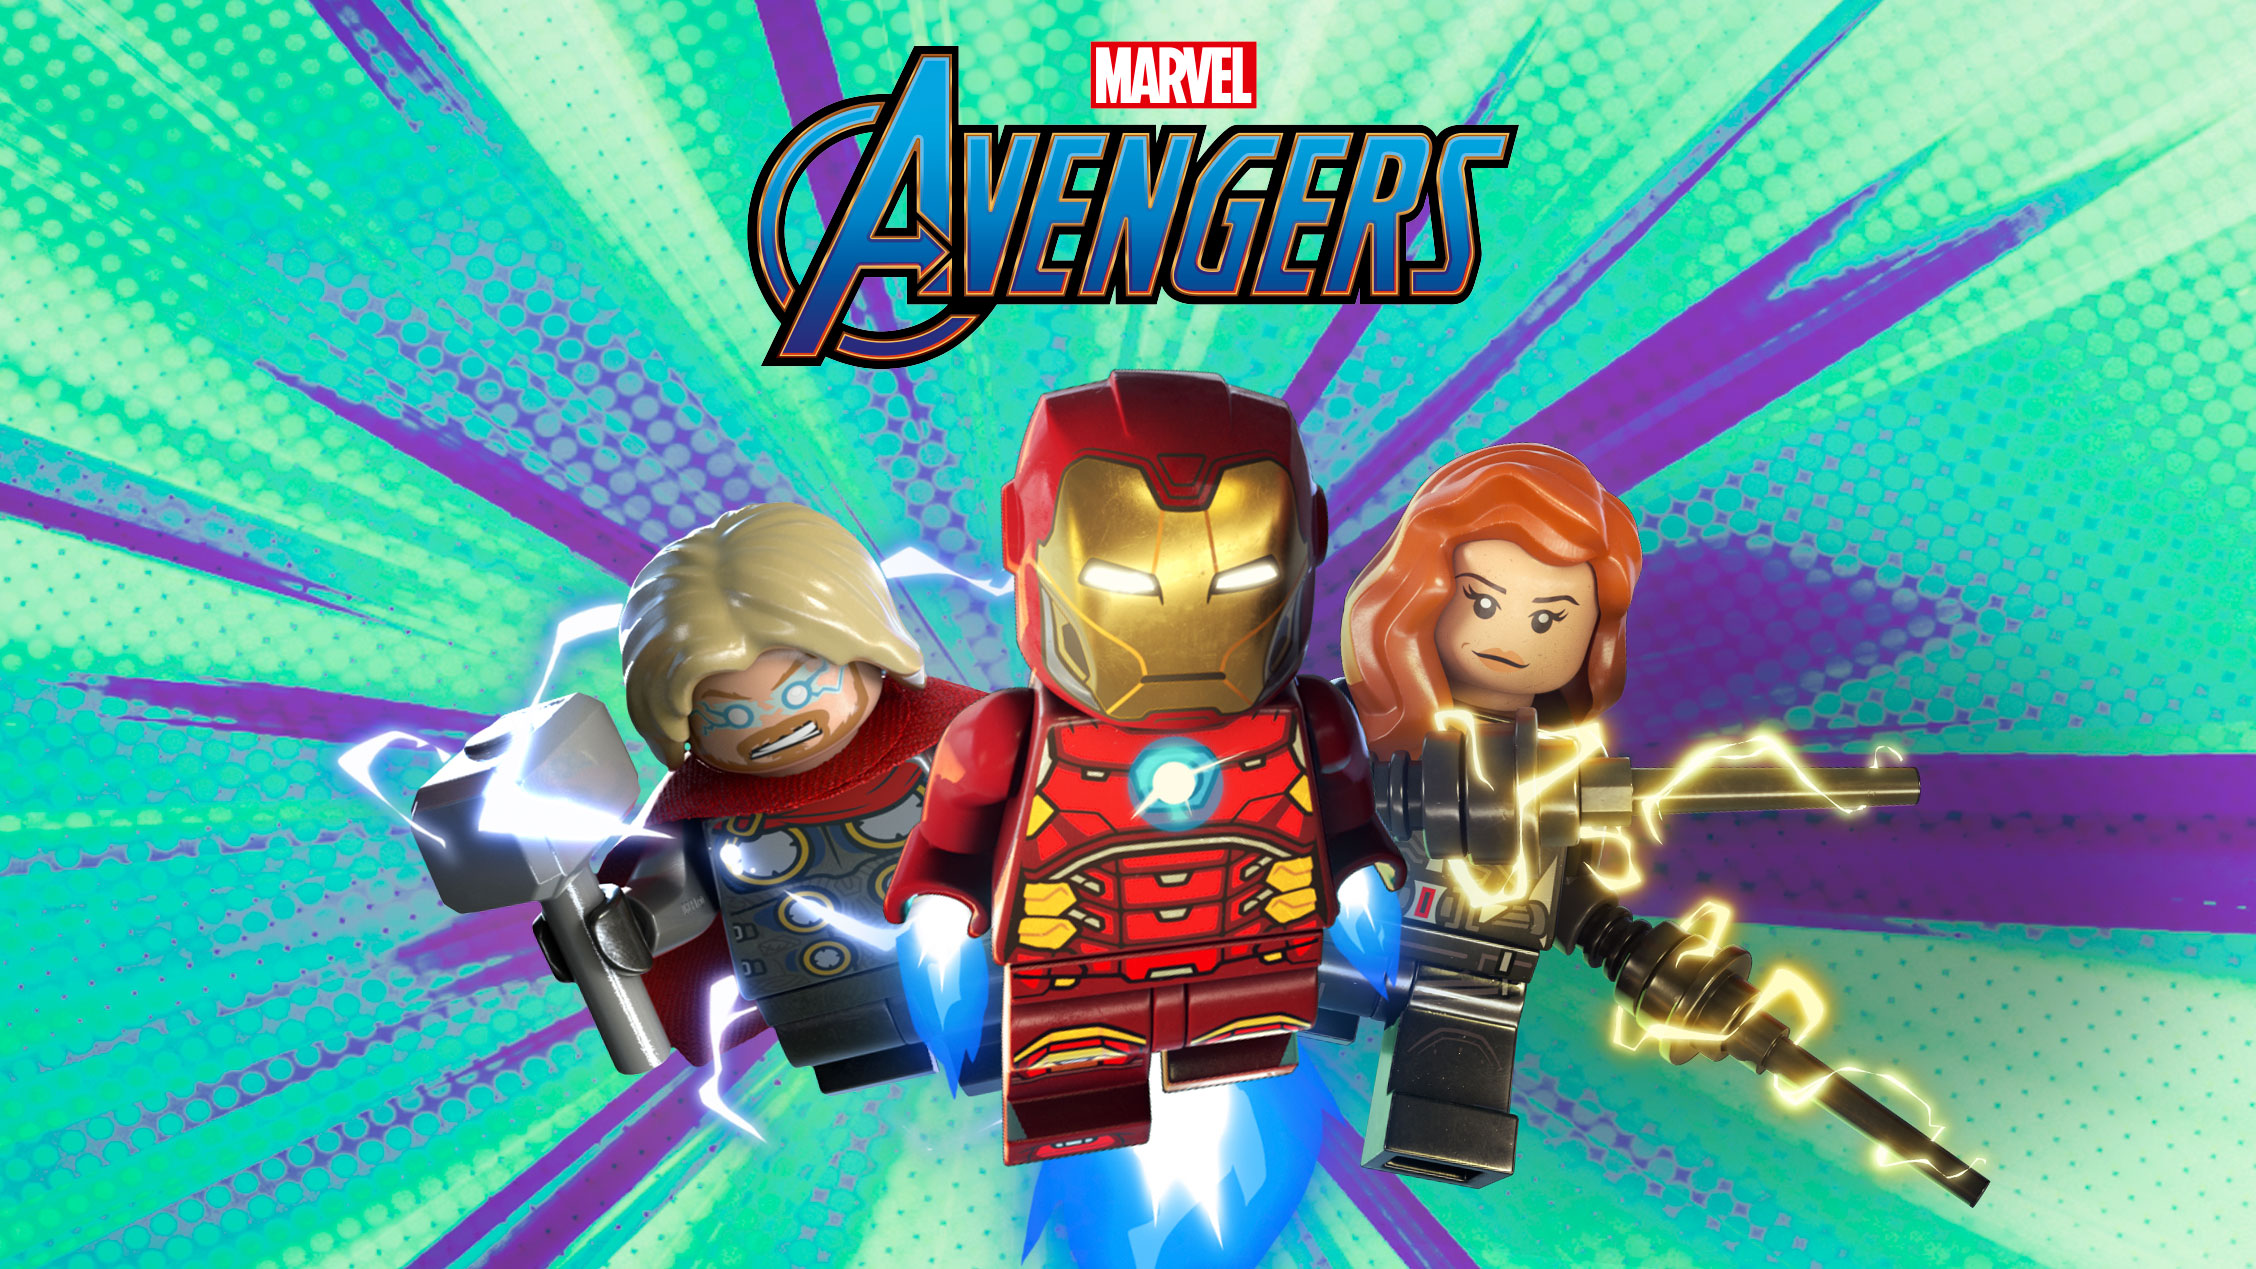 Loose LEGO Marvel Super Heroes Spider-Woman Minifigure